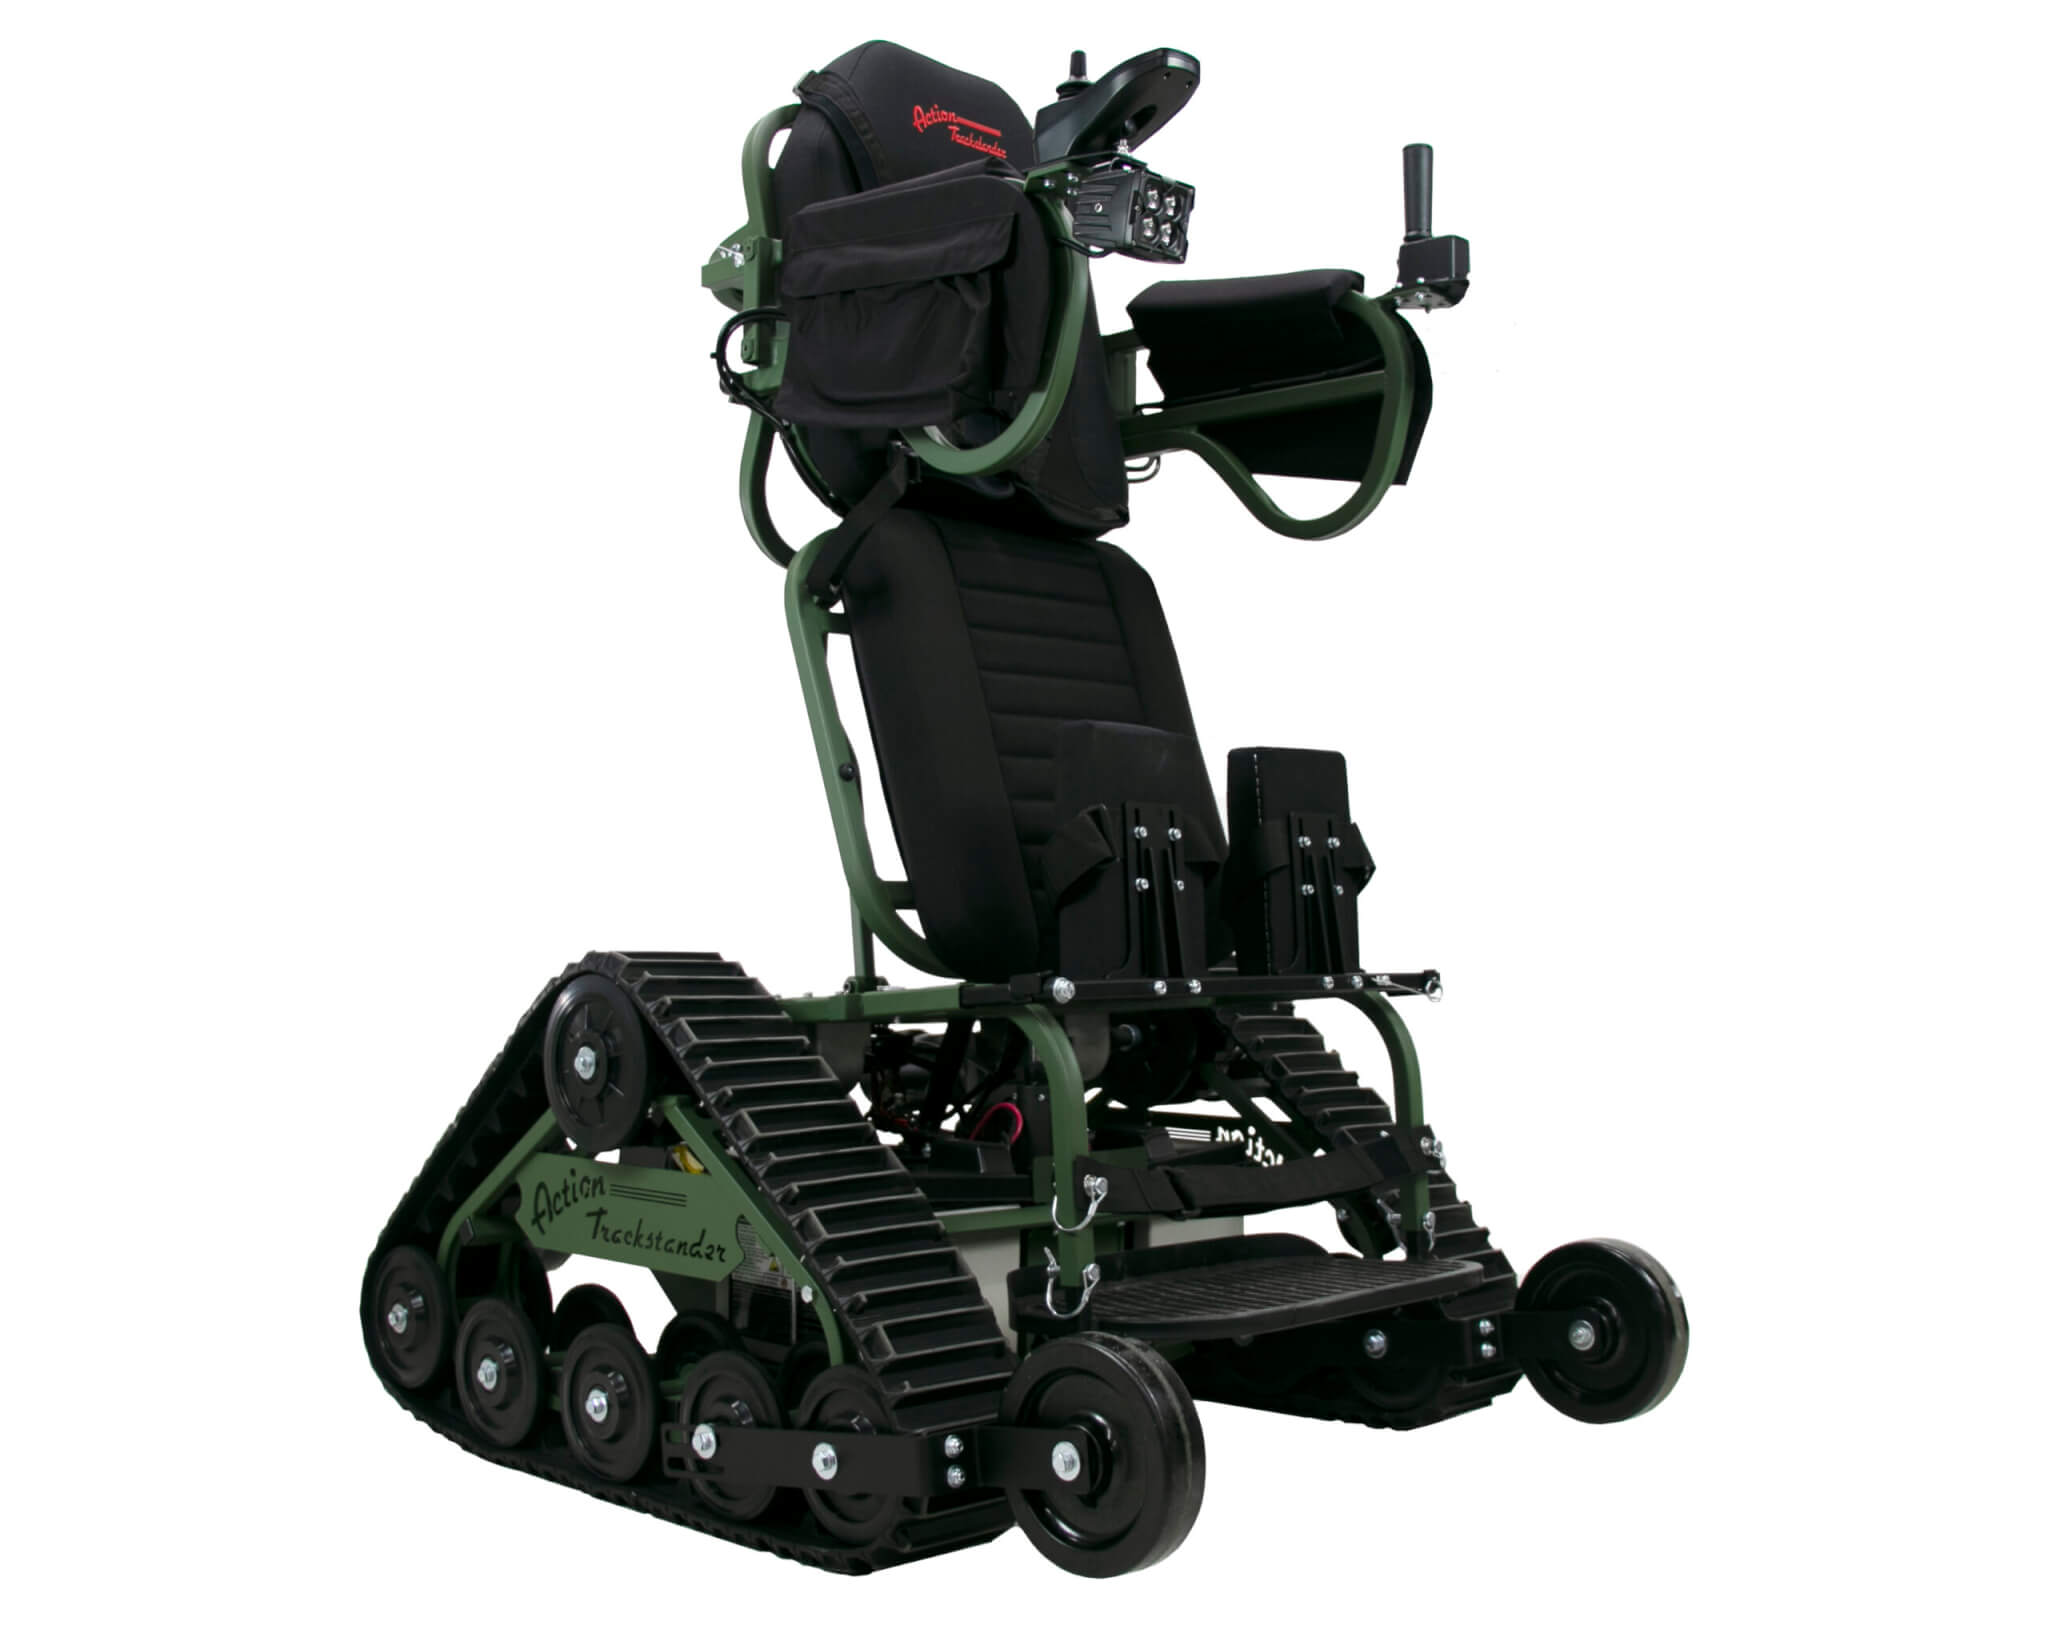 Action Trackstander TR All Terrain Wheelchair